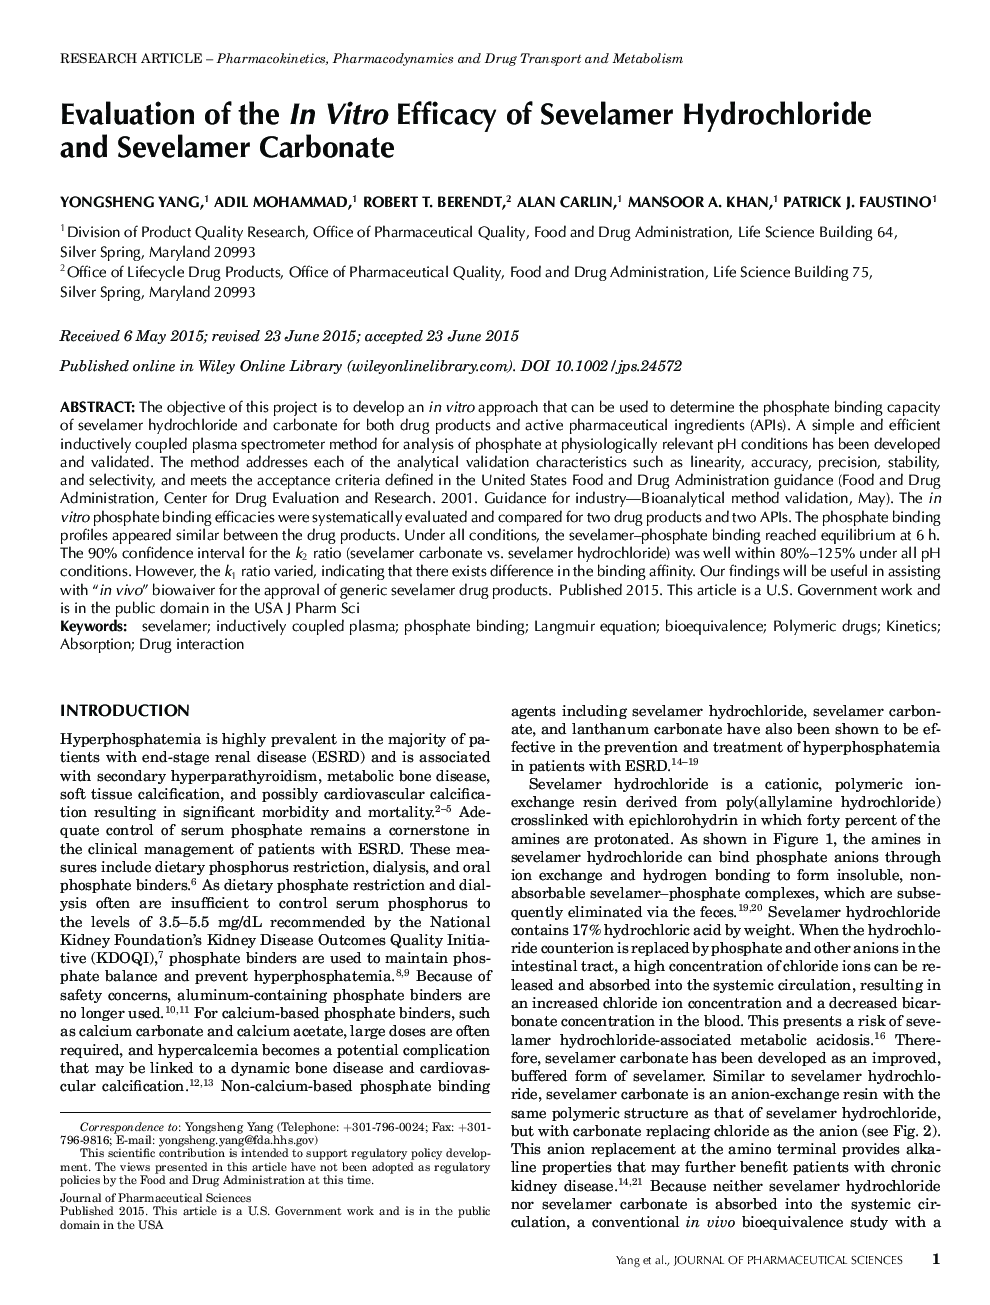 Evaluation of the InÂ Vitro Efficacy of Sevelamer Hydrochloride and Sevelamer Carbonate